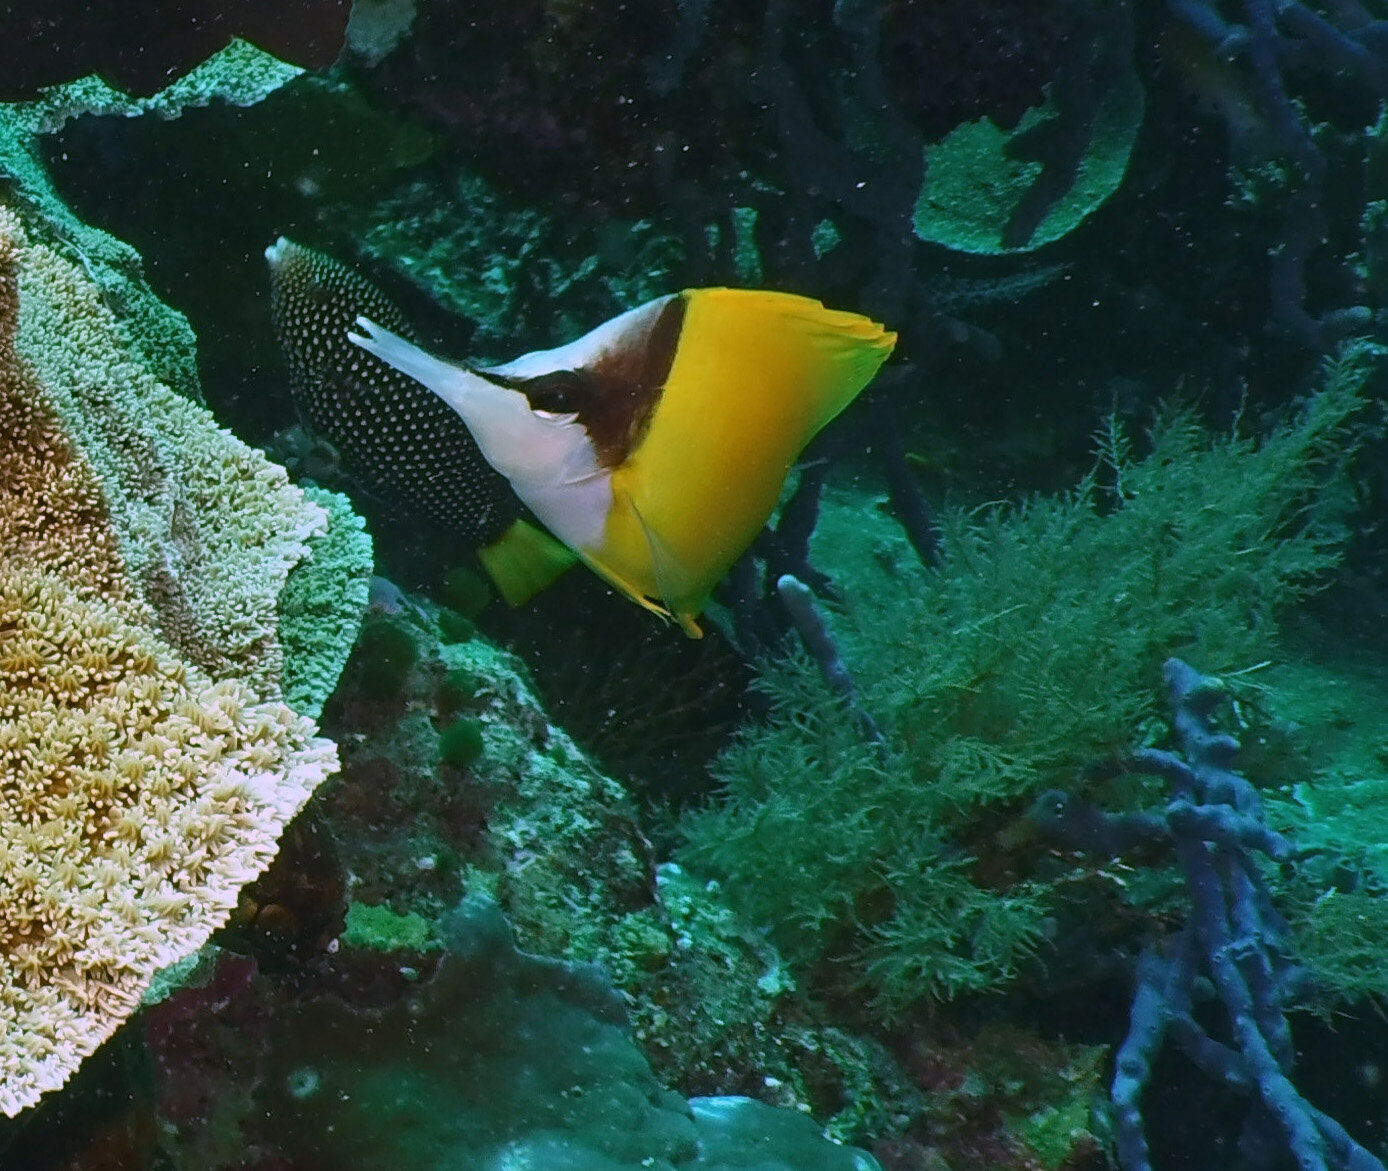  Longnose Butterflyfish and Yellow Tamarine Wrasse 